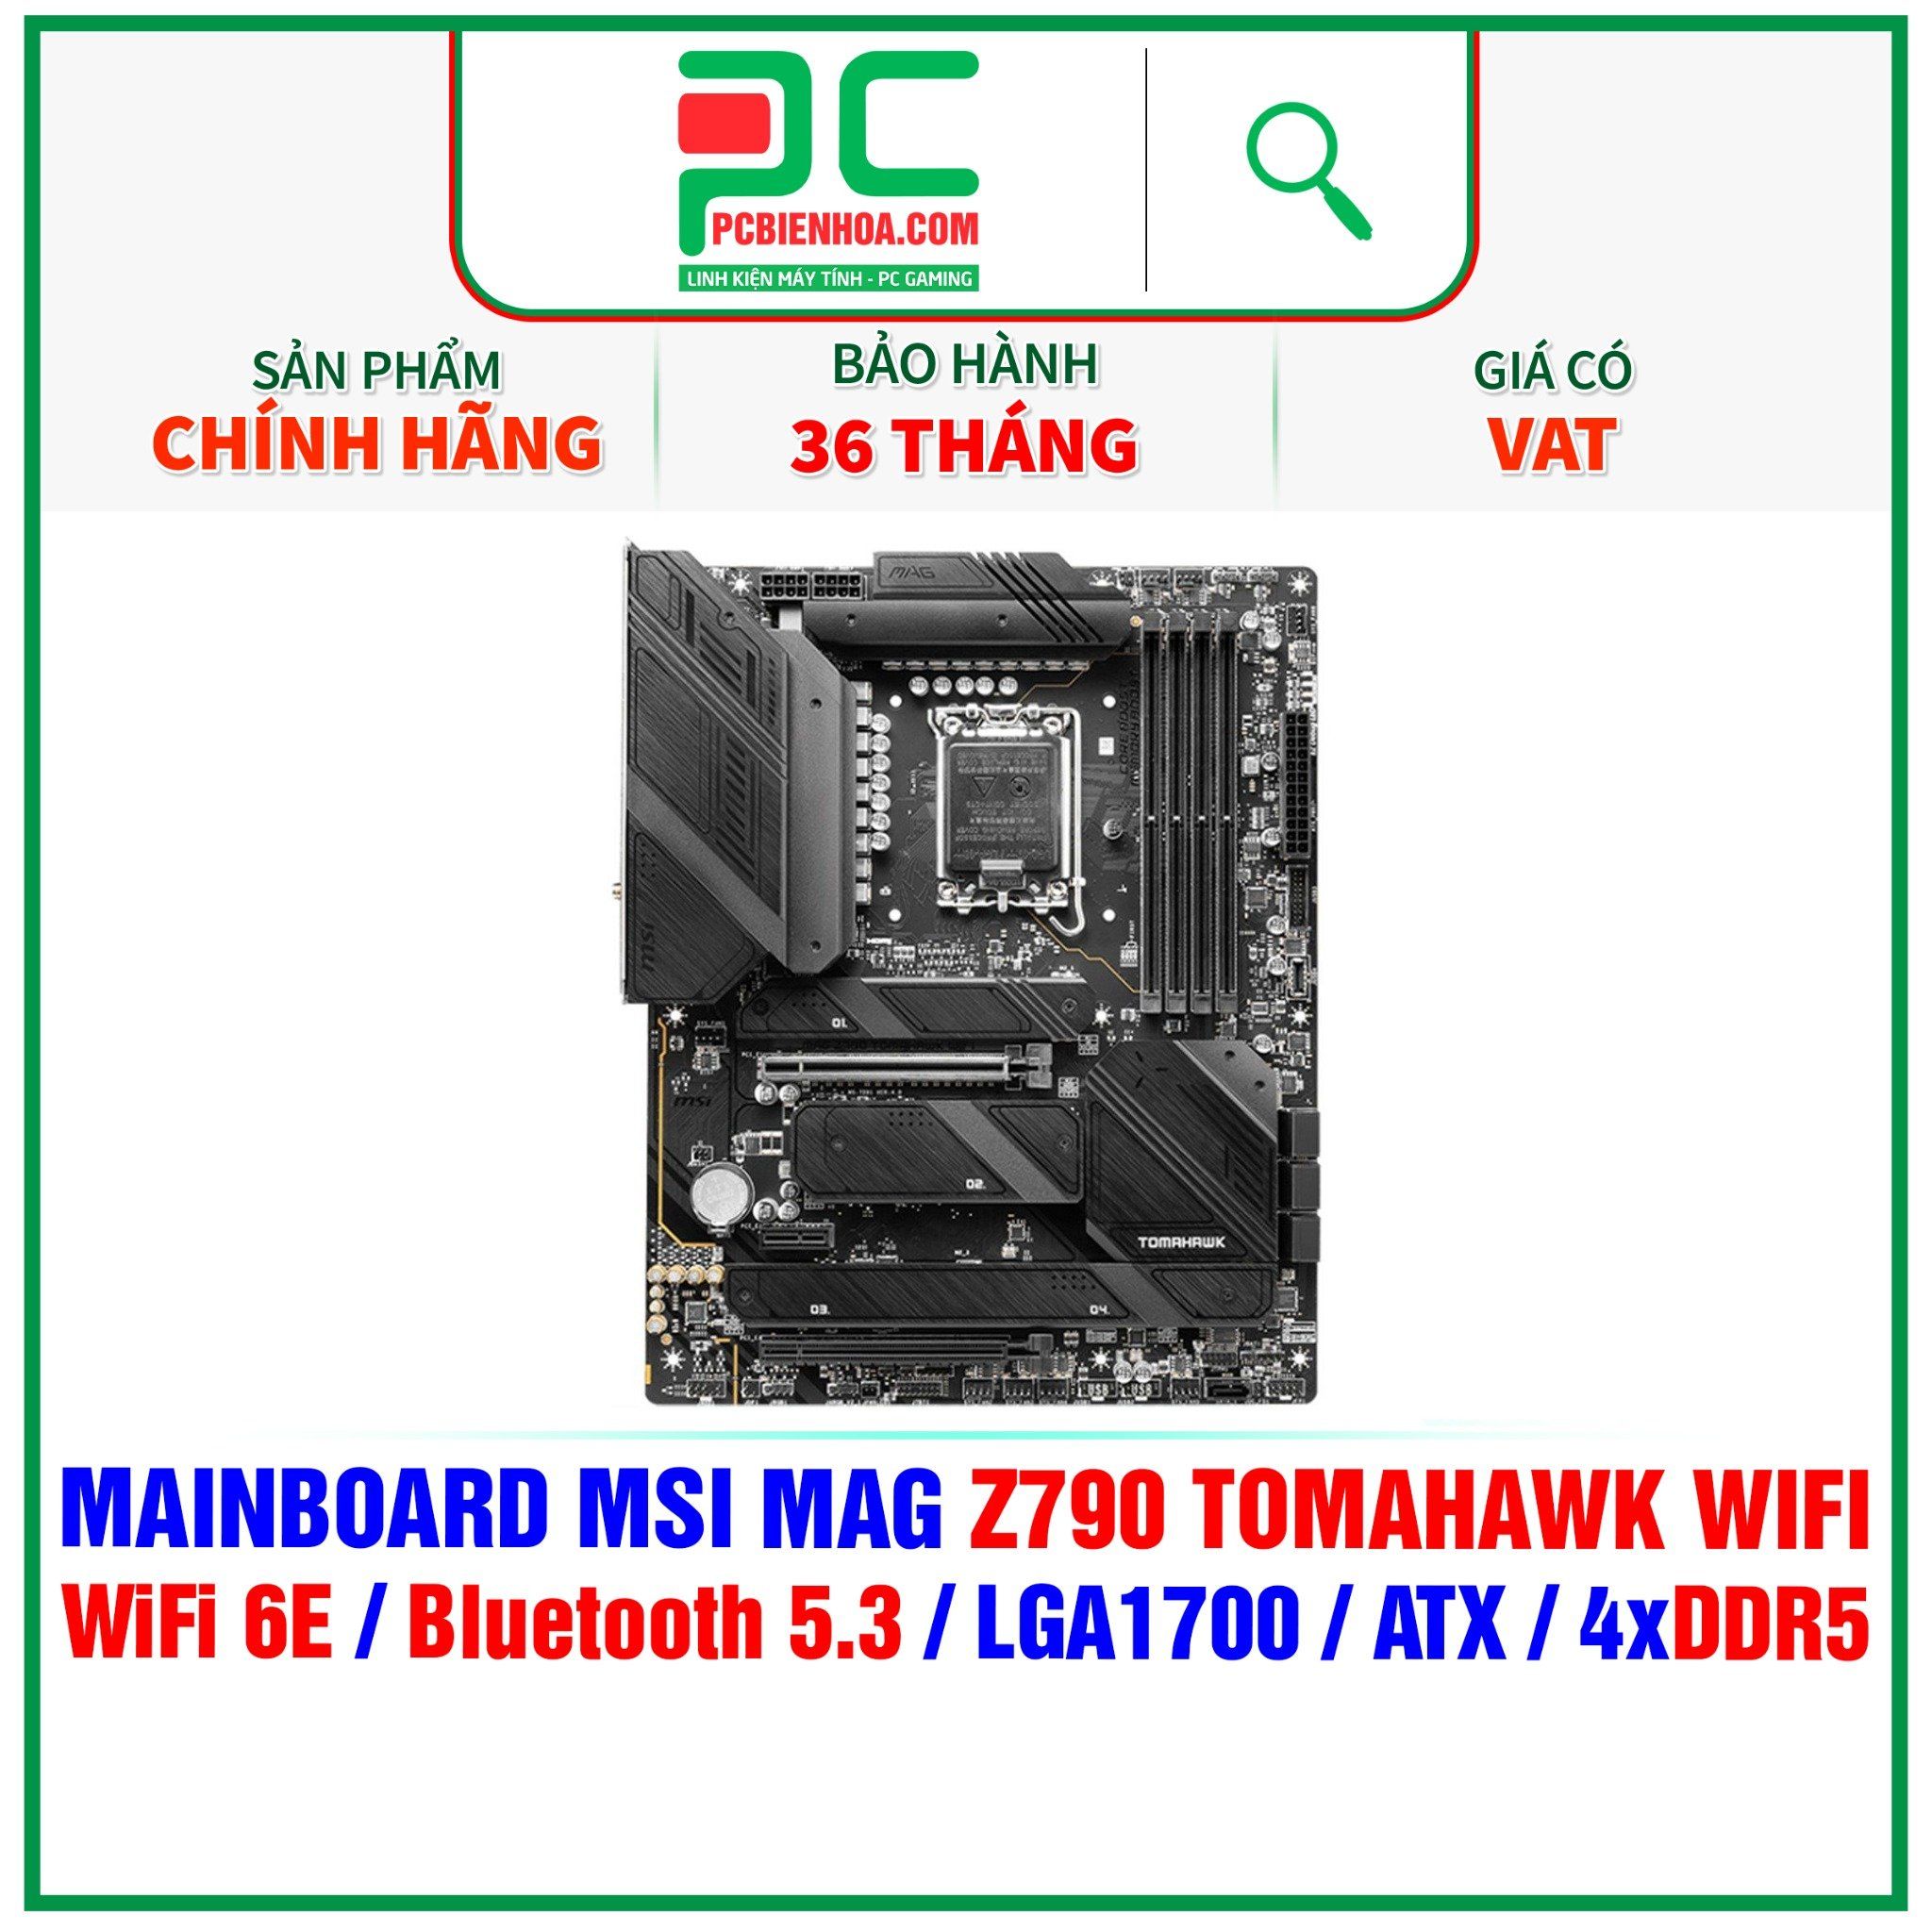  DDR5 - MAINBOARD MSI MAG Z790 TOMAHAWK WIFI ( WIFI 6E / Bluetooth 5.3 / LGA1700 / ATX / 4xDDR5 ) 